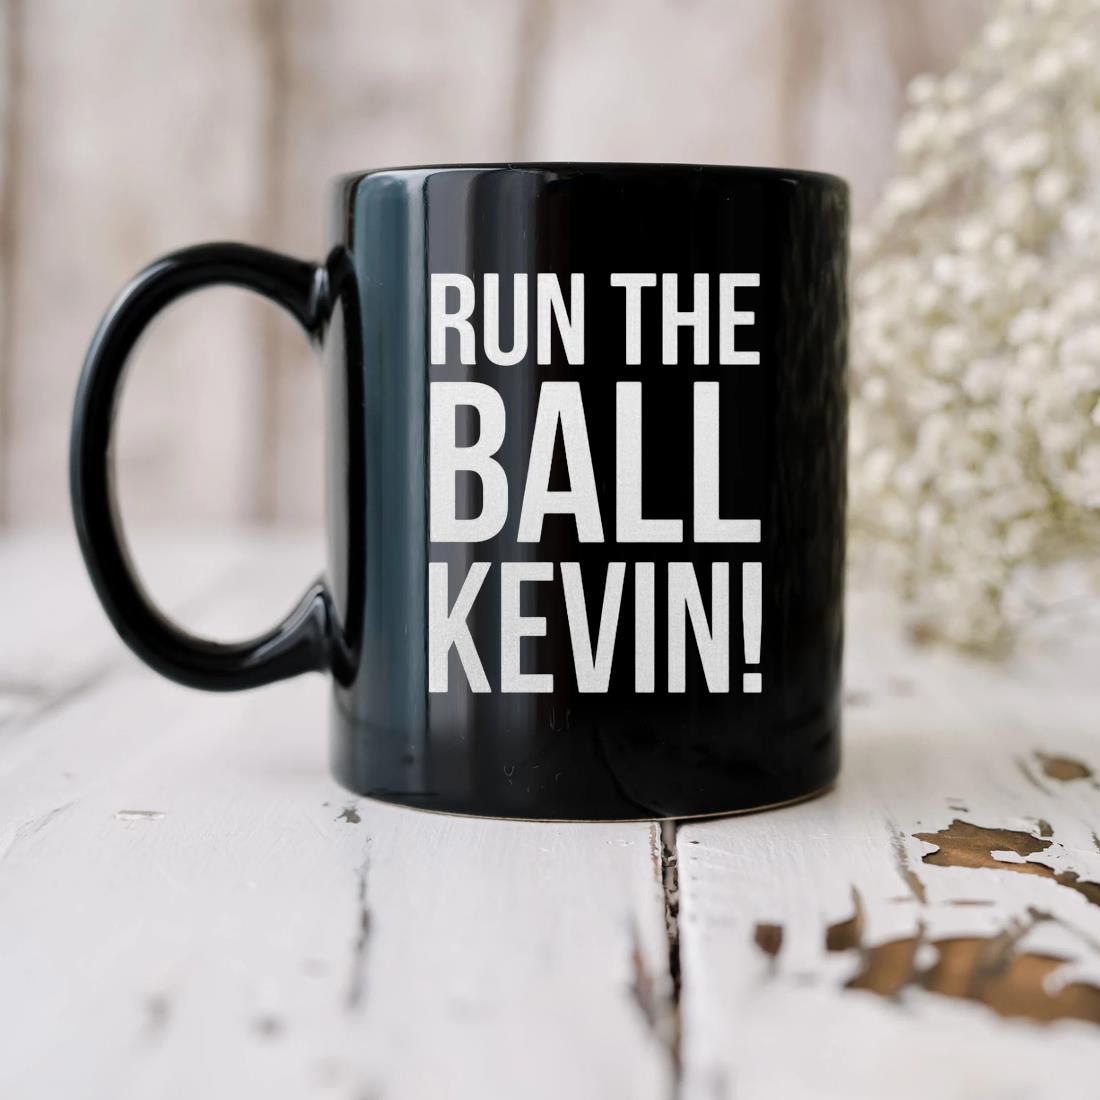 Run The Ball Kevin Mug biu